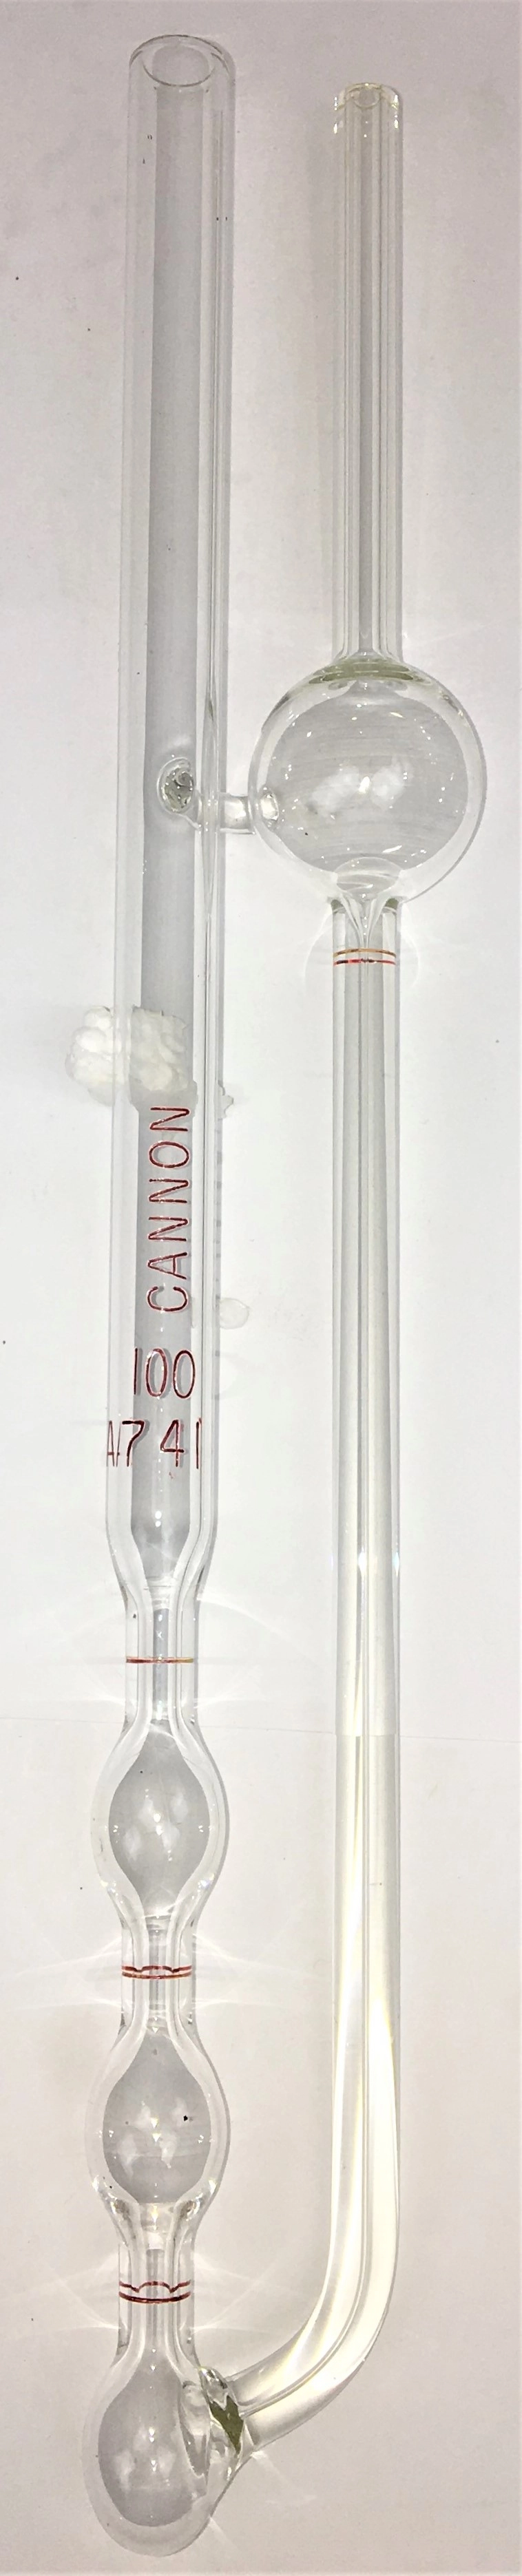 Cannon-Fenske CFOC-100 (9721-F59) Certified Opaque Viscometer Tube - Size 100